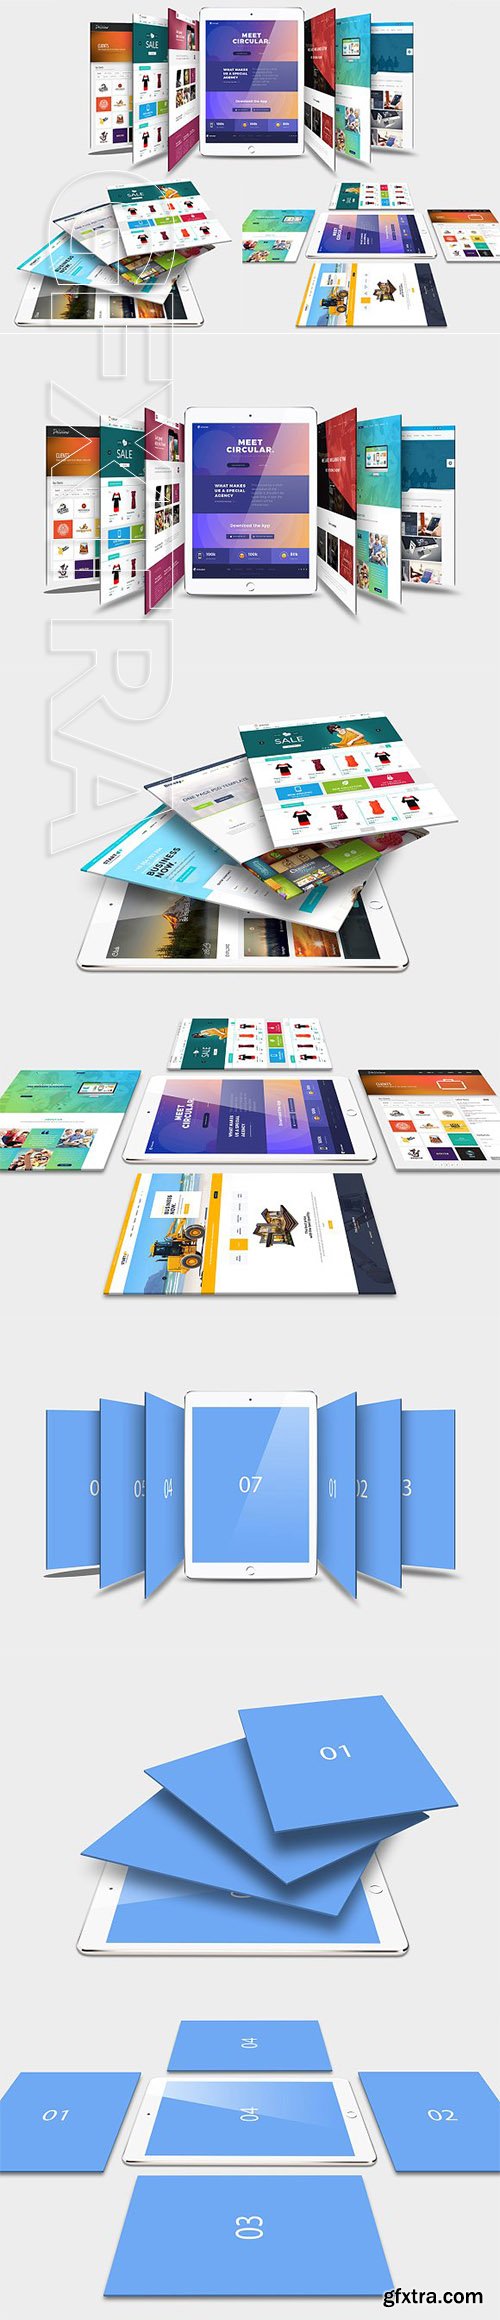 CreativeMarket - iPad Mock-Up 06 2847466